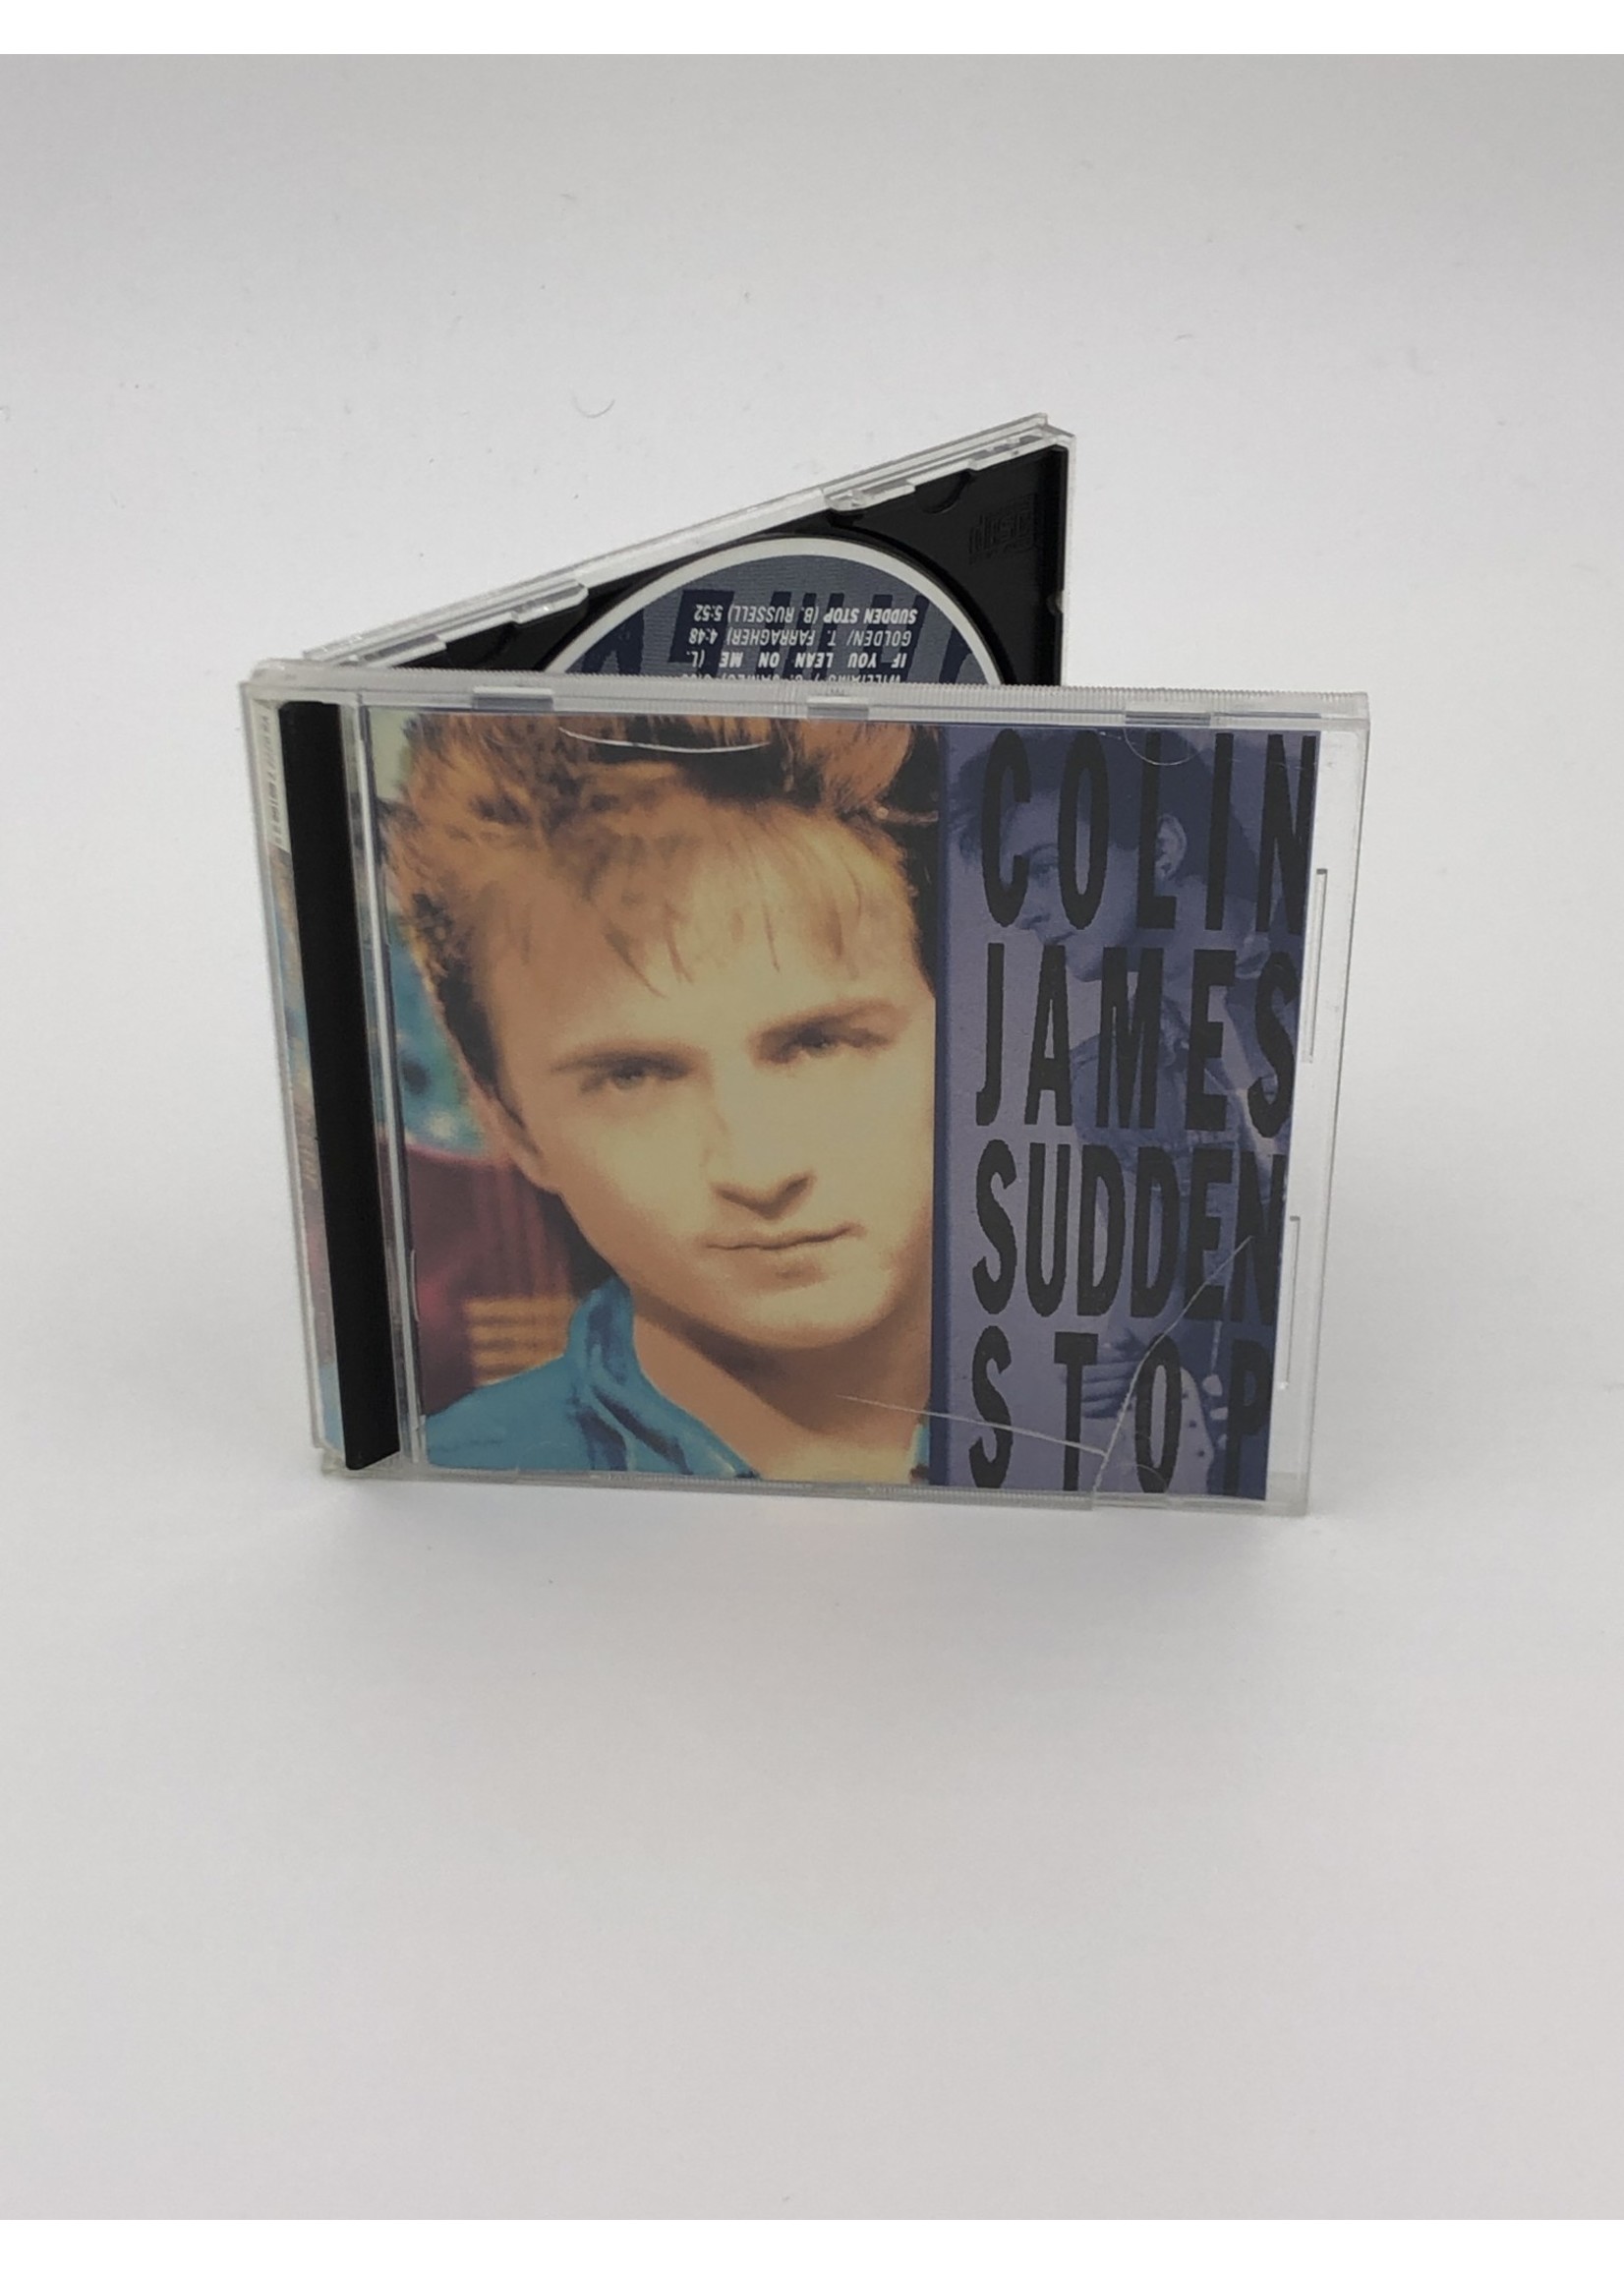 CD Colin James: Sudden Stop CD alt